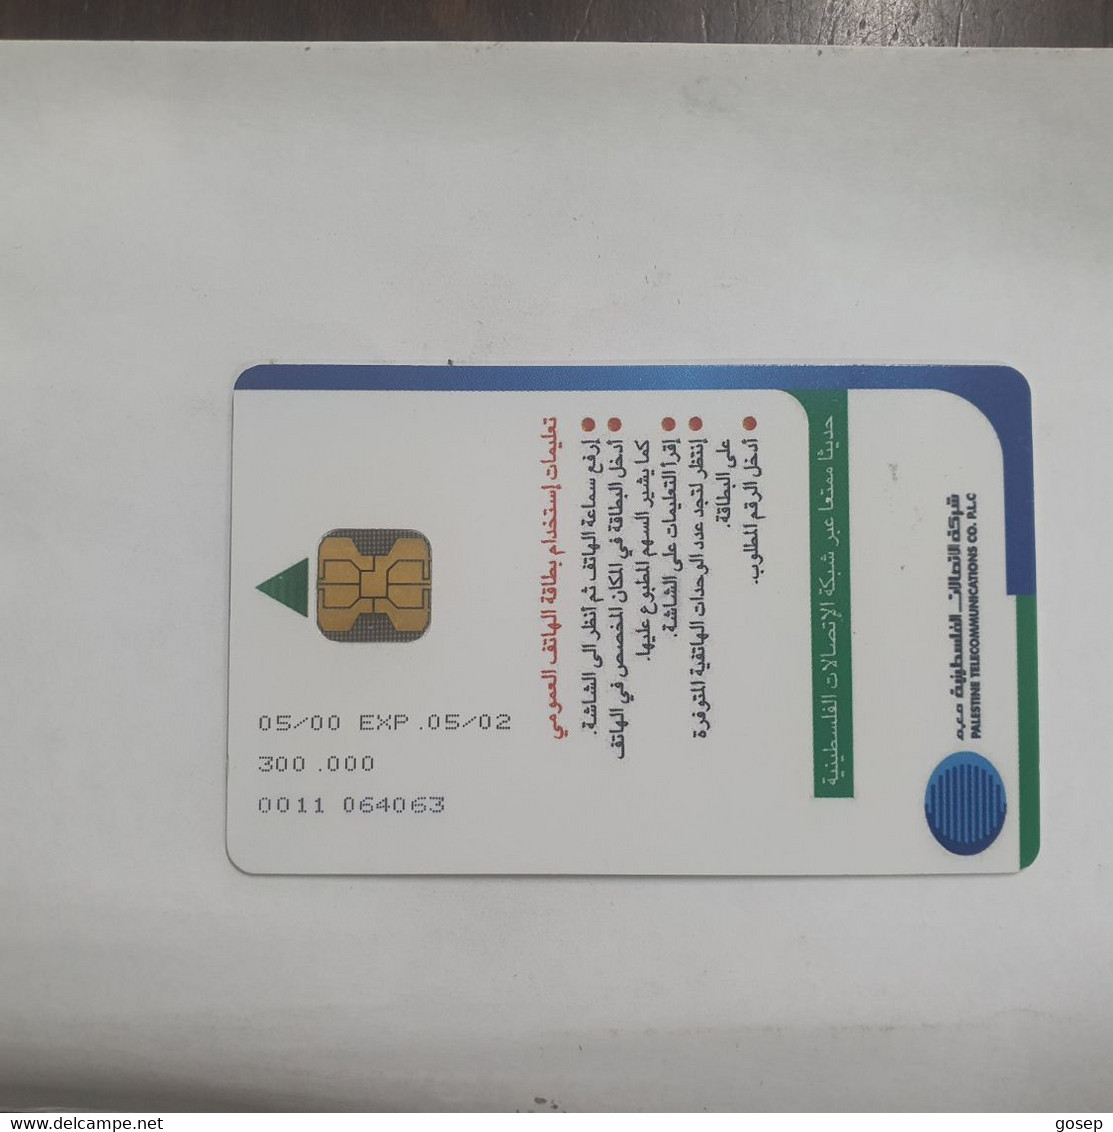 Plastine-(PS-PAL-0011C.2)-Green Enivironment-(509)-(5/2000)(10₪)(0011-064063)-used Card+1card Prepiad Free - Palestine